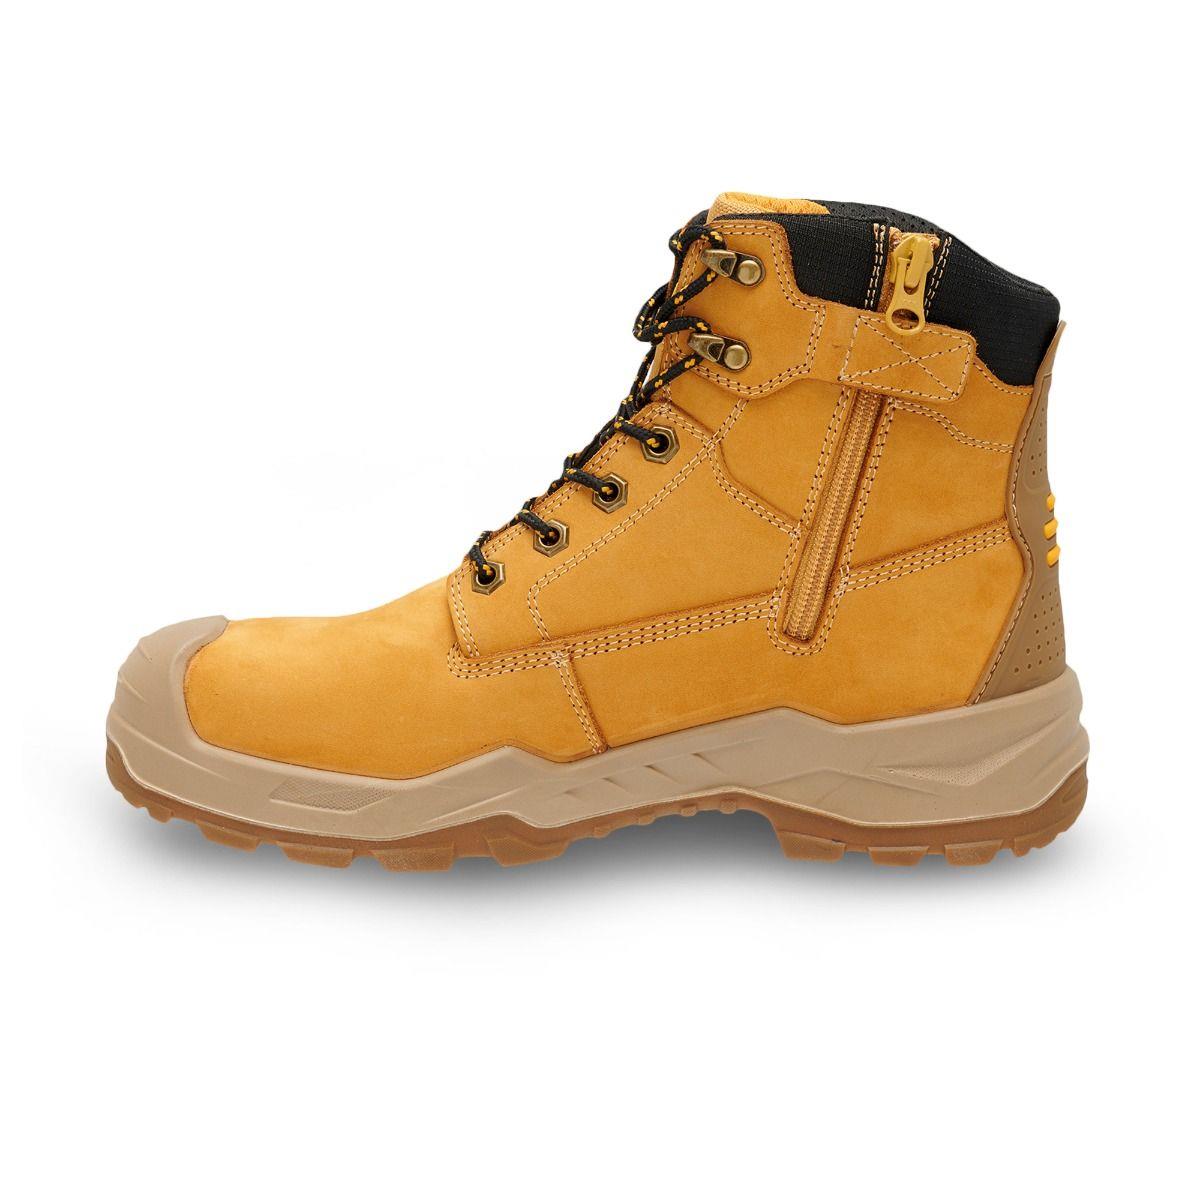 DeWalt Jamestown S3 honey wide fit water resistant side zip work safety boots